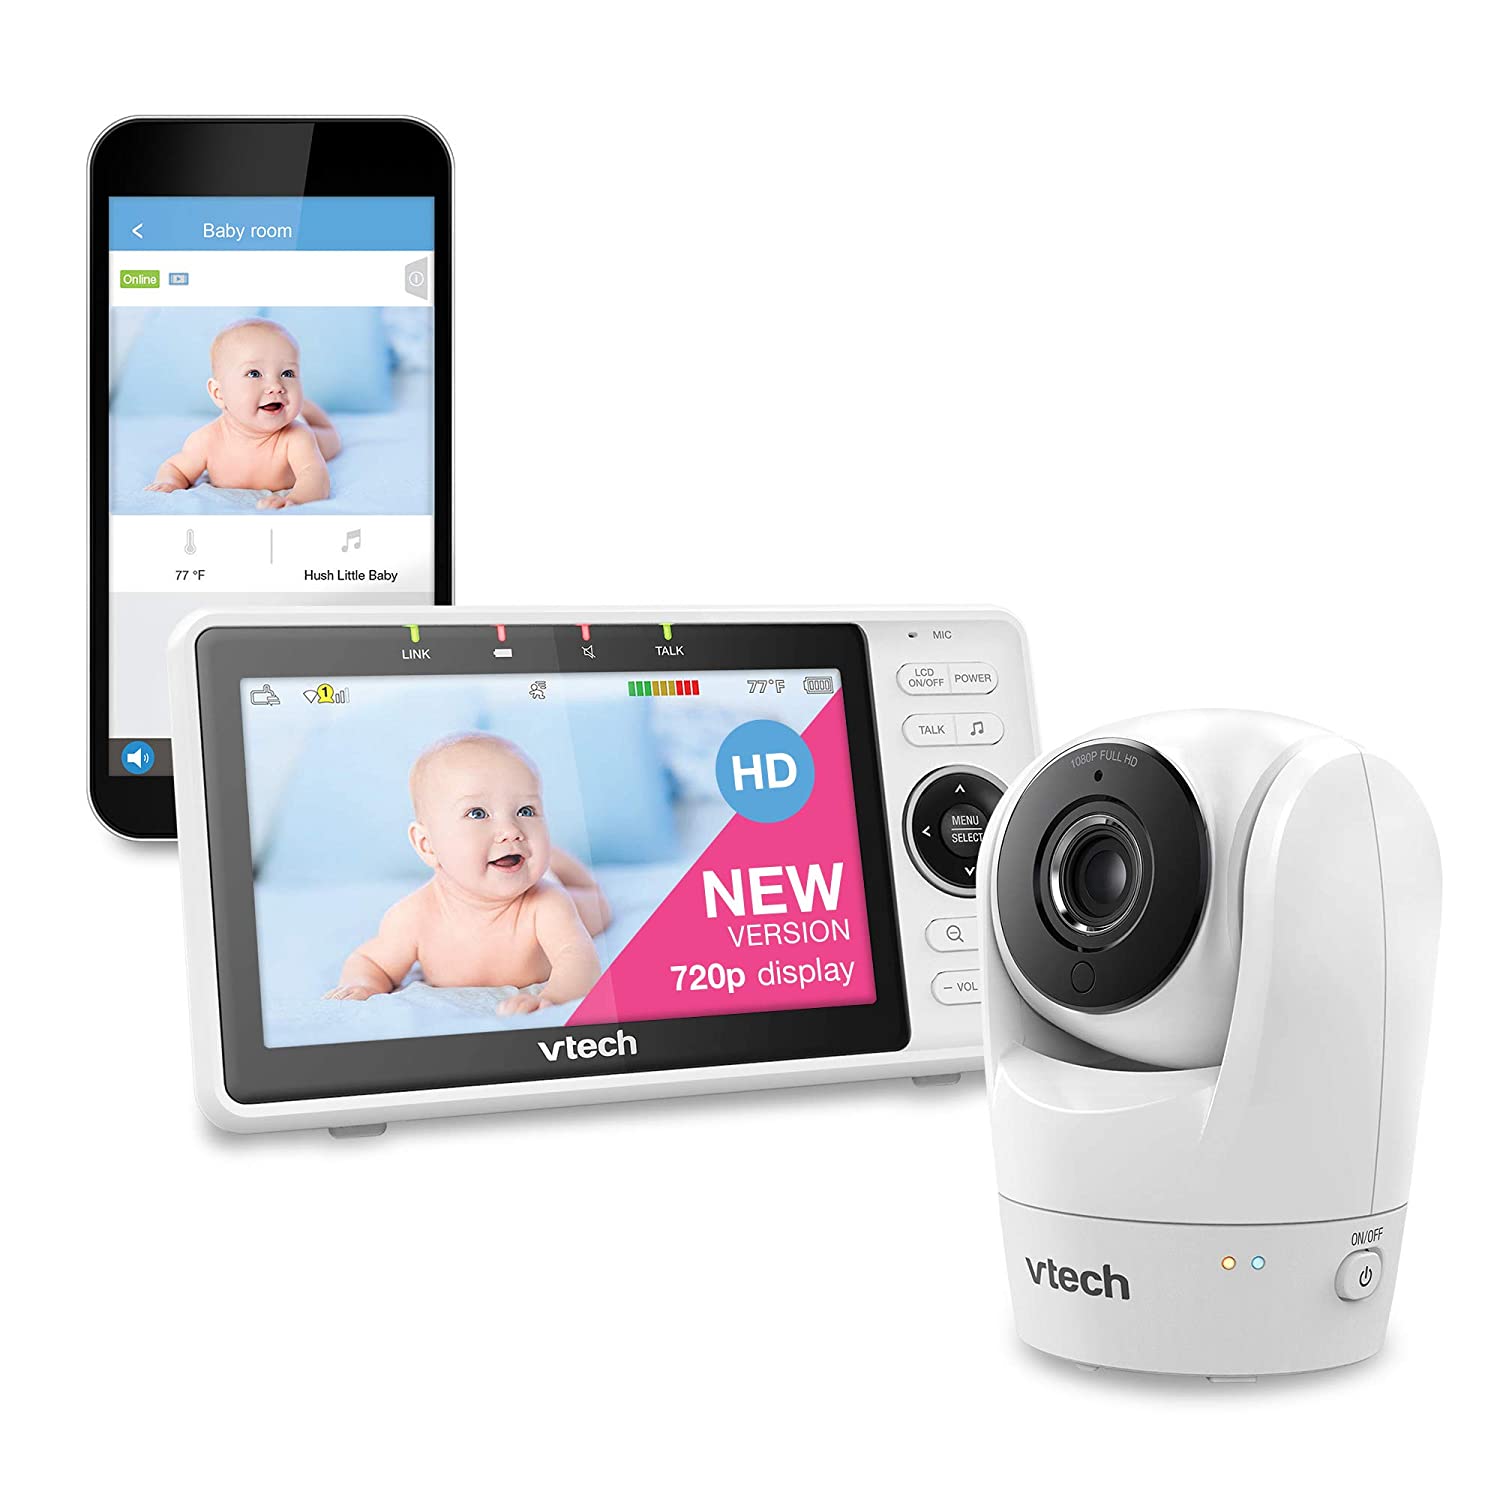 [3美國直購] 嬰兒監視器 VTech Upgraded Smart WiFi Baby Monitor VM901, 5-inch 720p Display, 1080p Camera